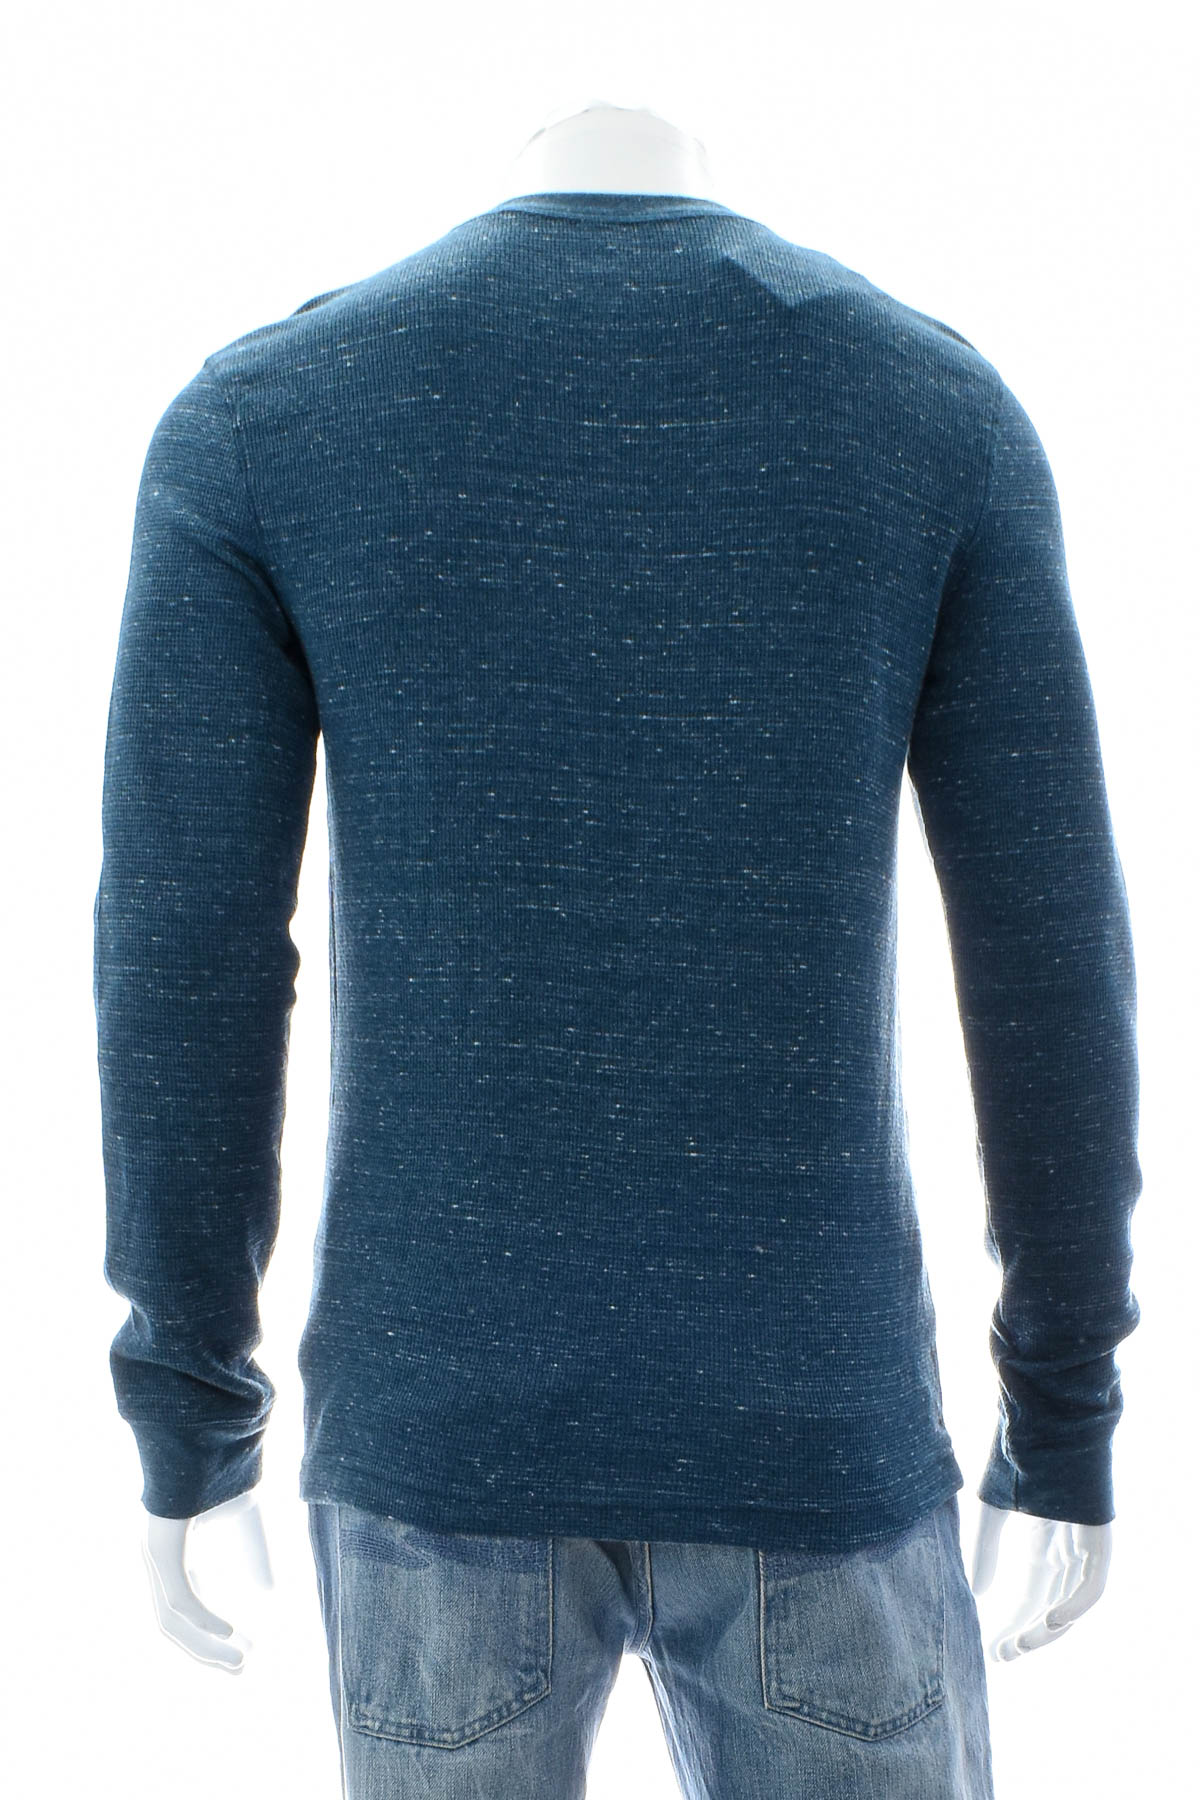 Men's sweater - Sonoma - 1